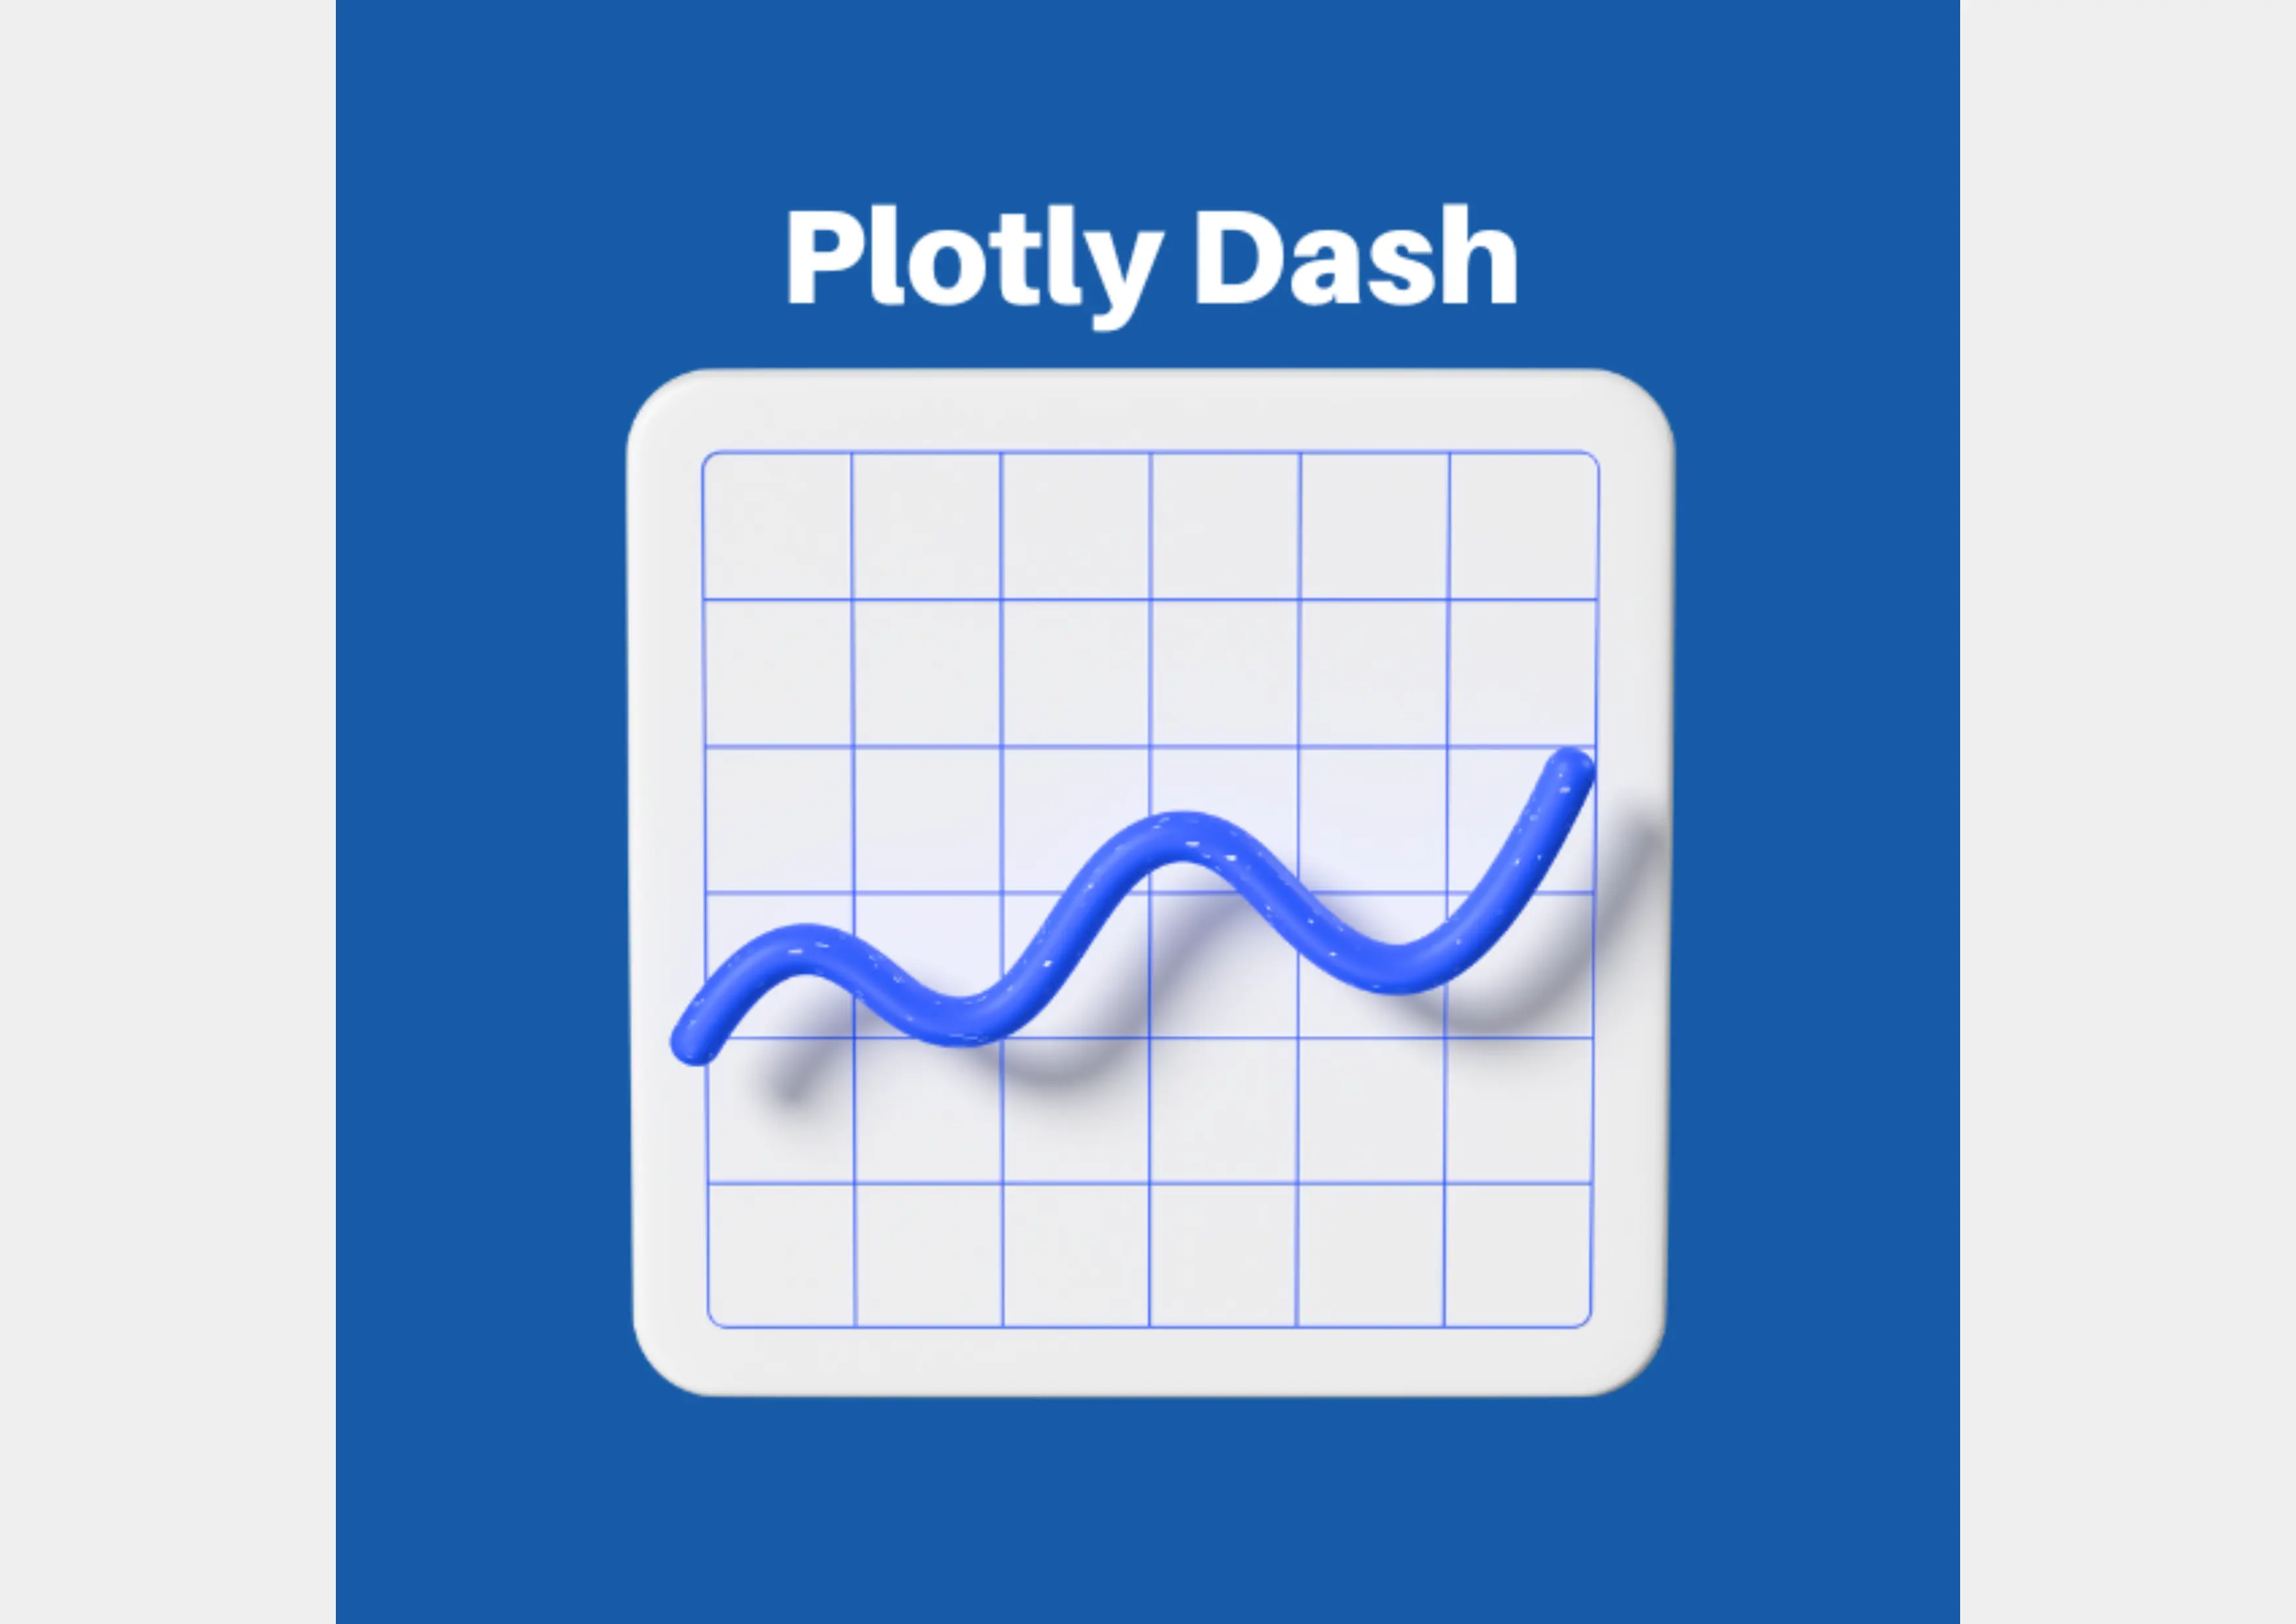 Enterprise-Level Plotly Dash App Template